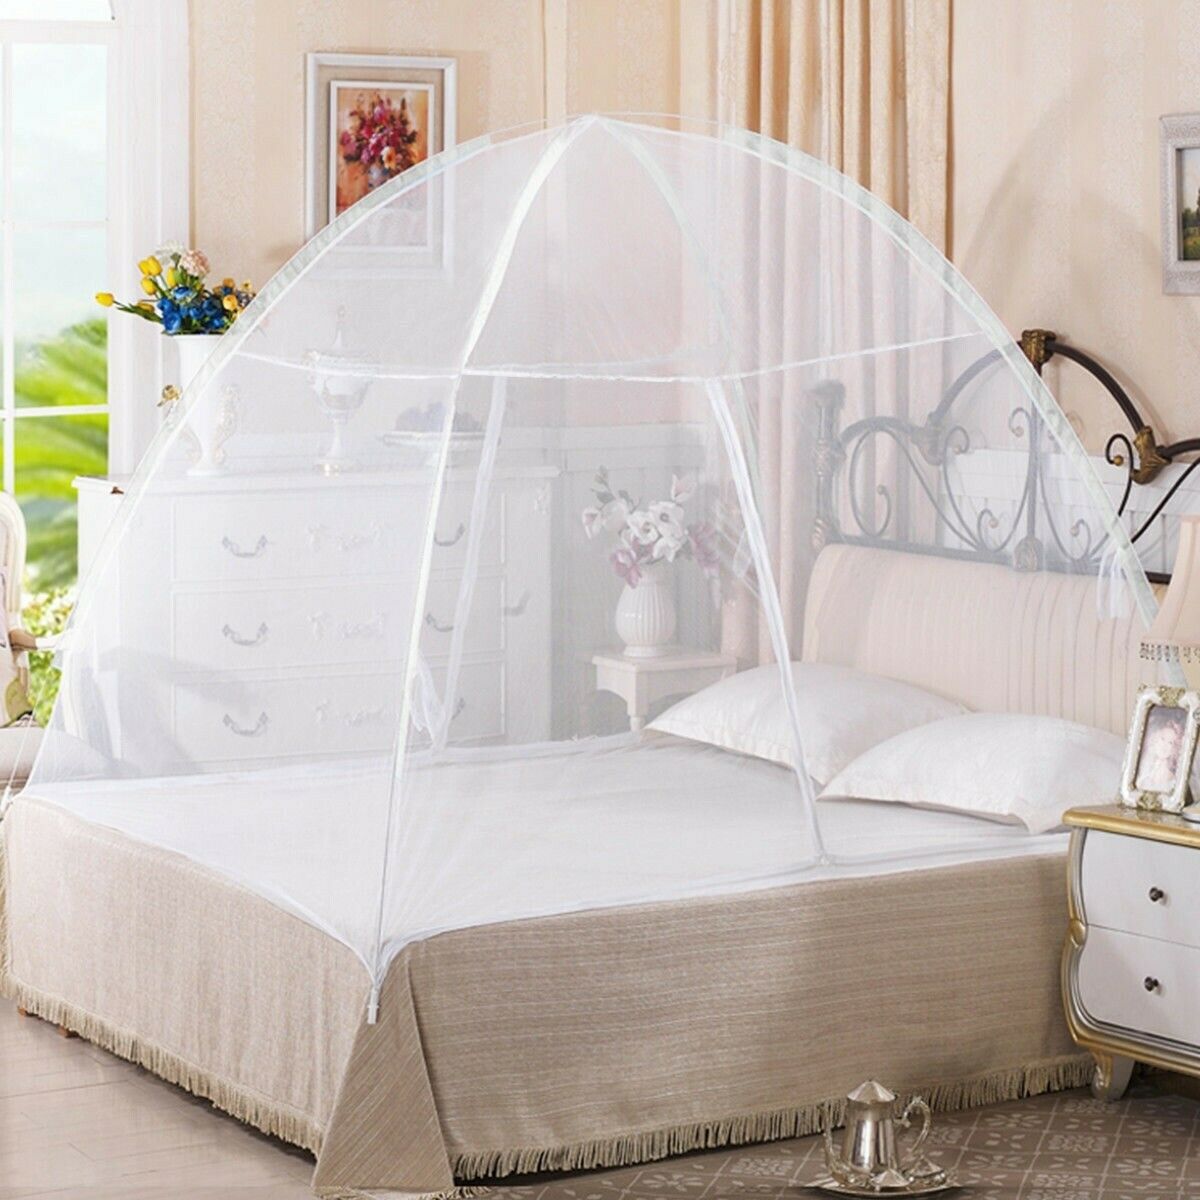 Portable Mosquito Net - Big